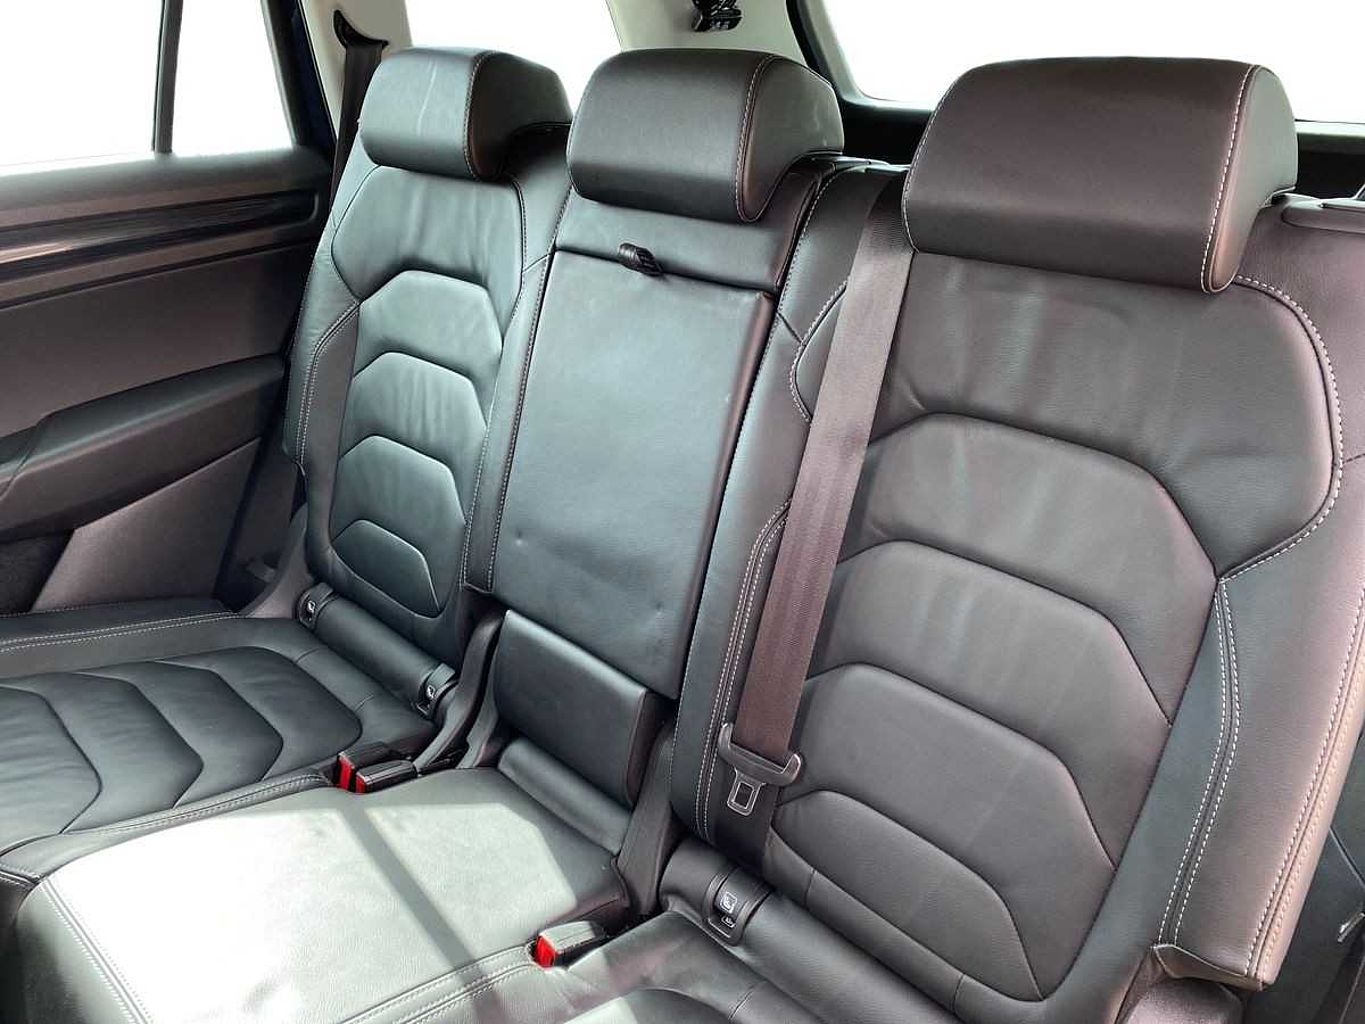 SKODA Kodiaq 2.0 TSI (180ps) 4X4 Edition 5 seats DSG SUV